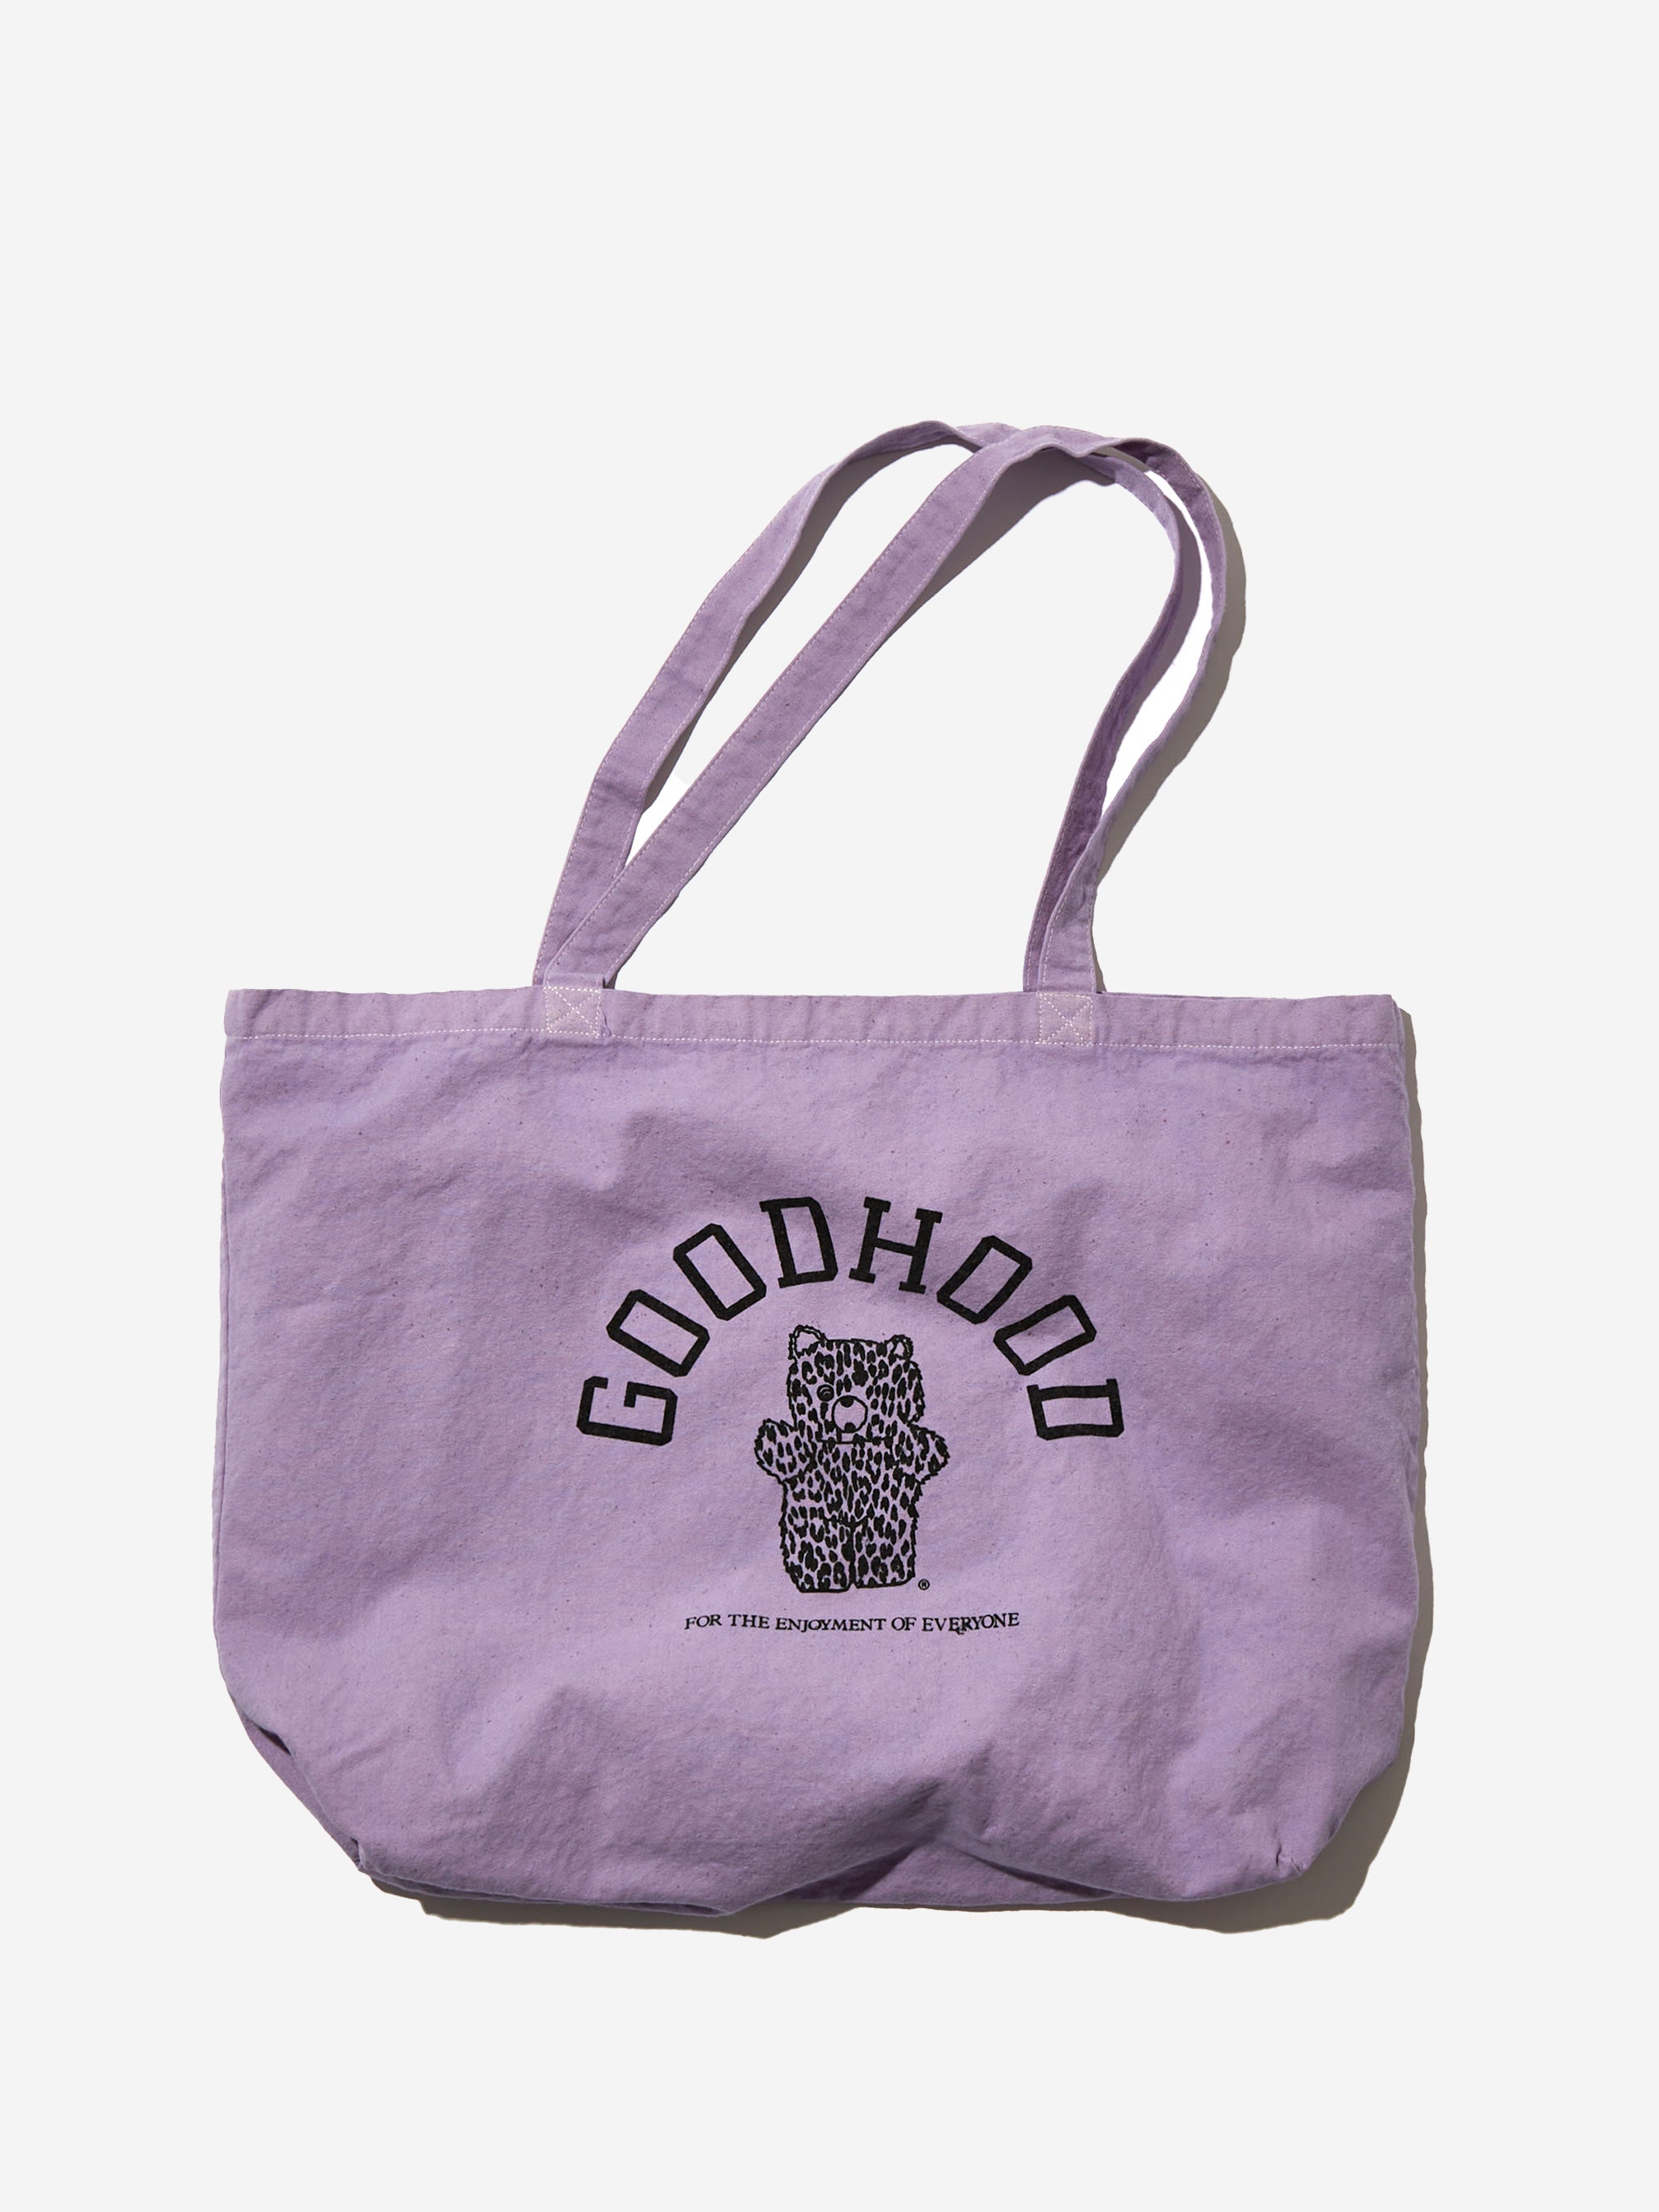 Goodwood England Tote Bag – The Goodwood Shop